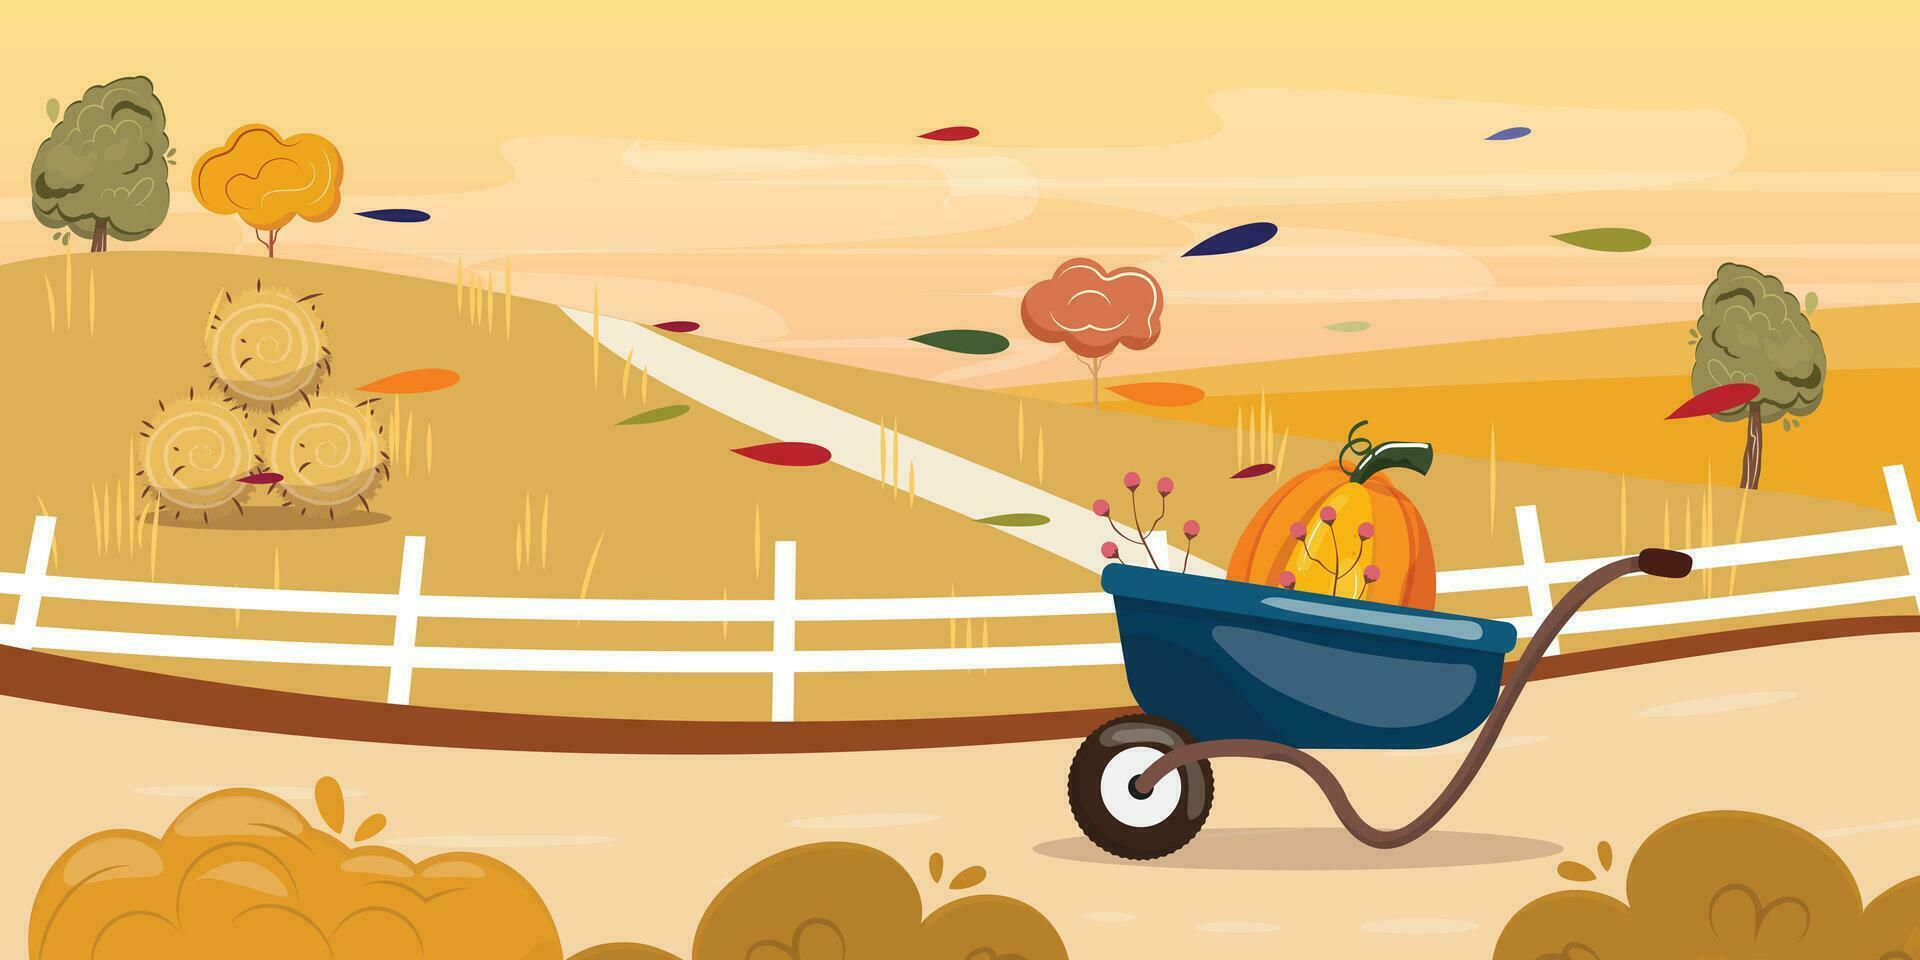 rural naturaleza otoño antecedentes con un carretilla. vector plano otoño ilustración.